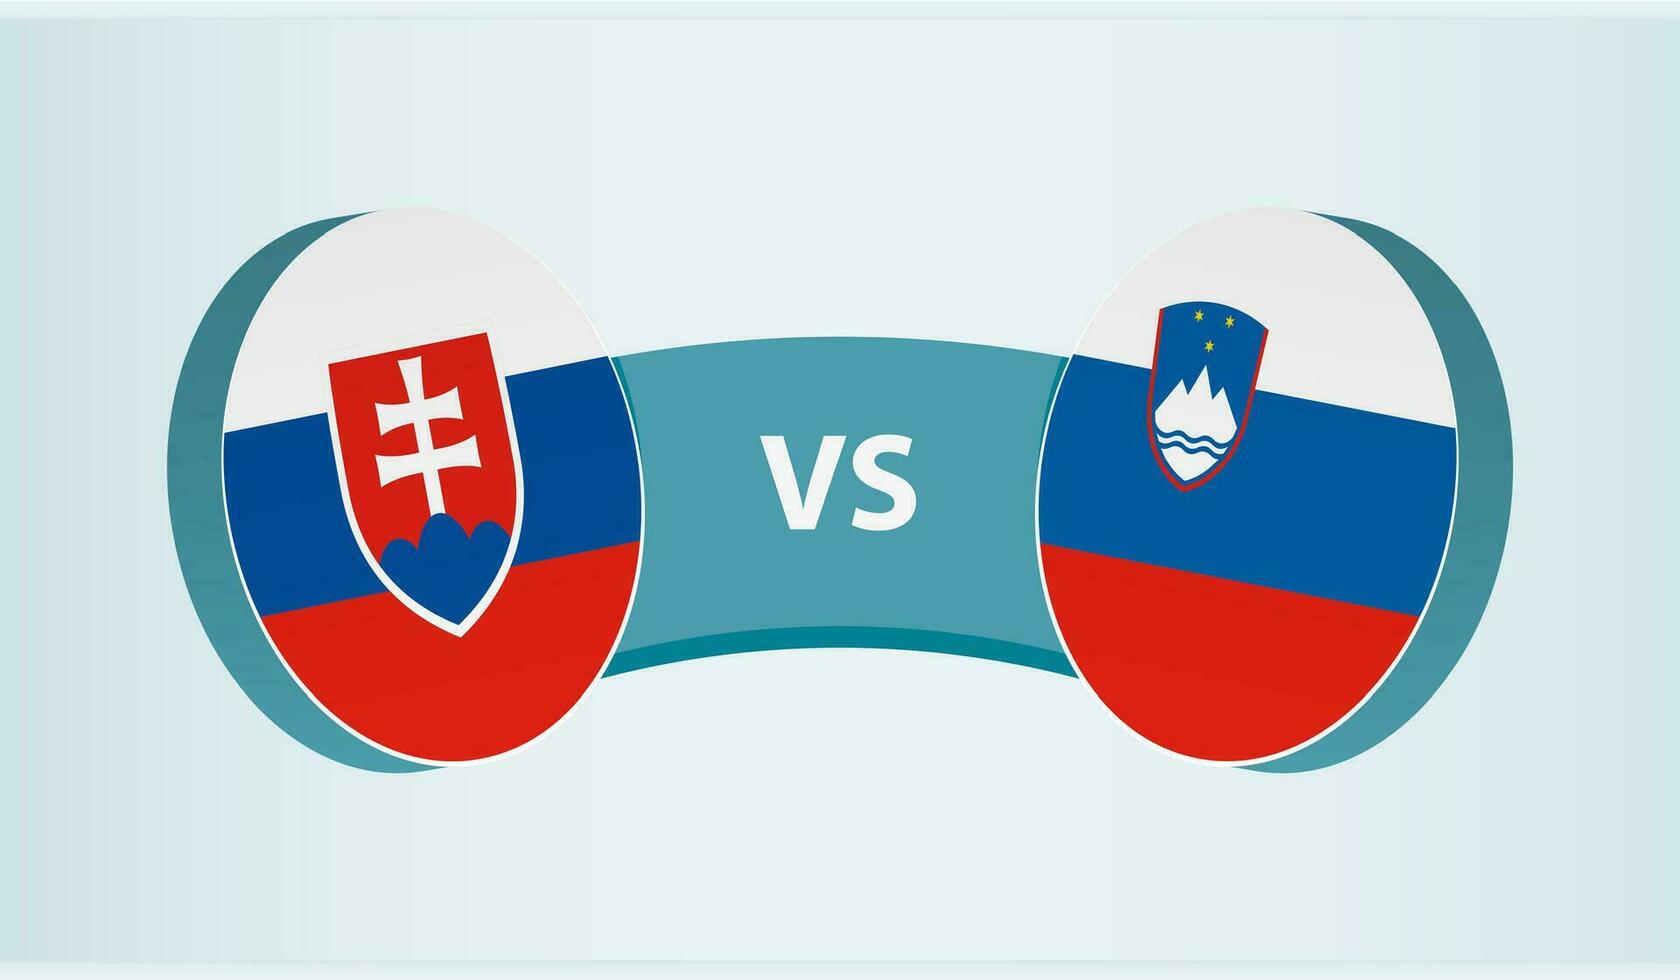 slovakia mot Slovenien, team sporter konkurrens begrepp. vektor